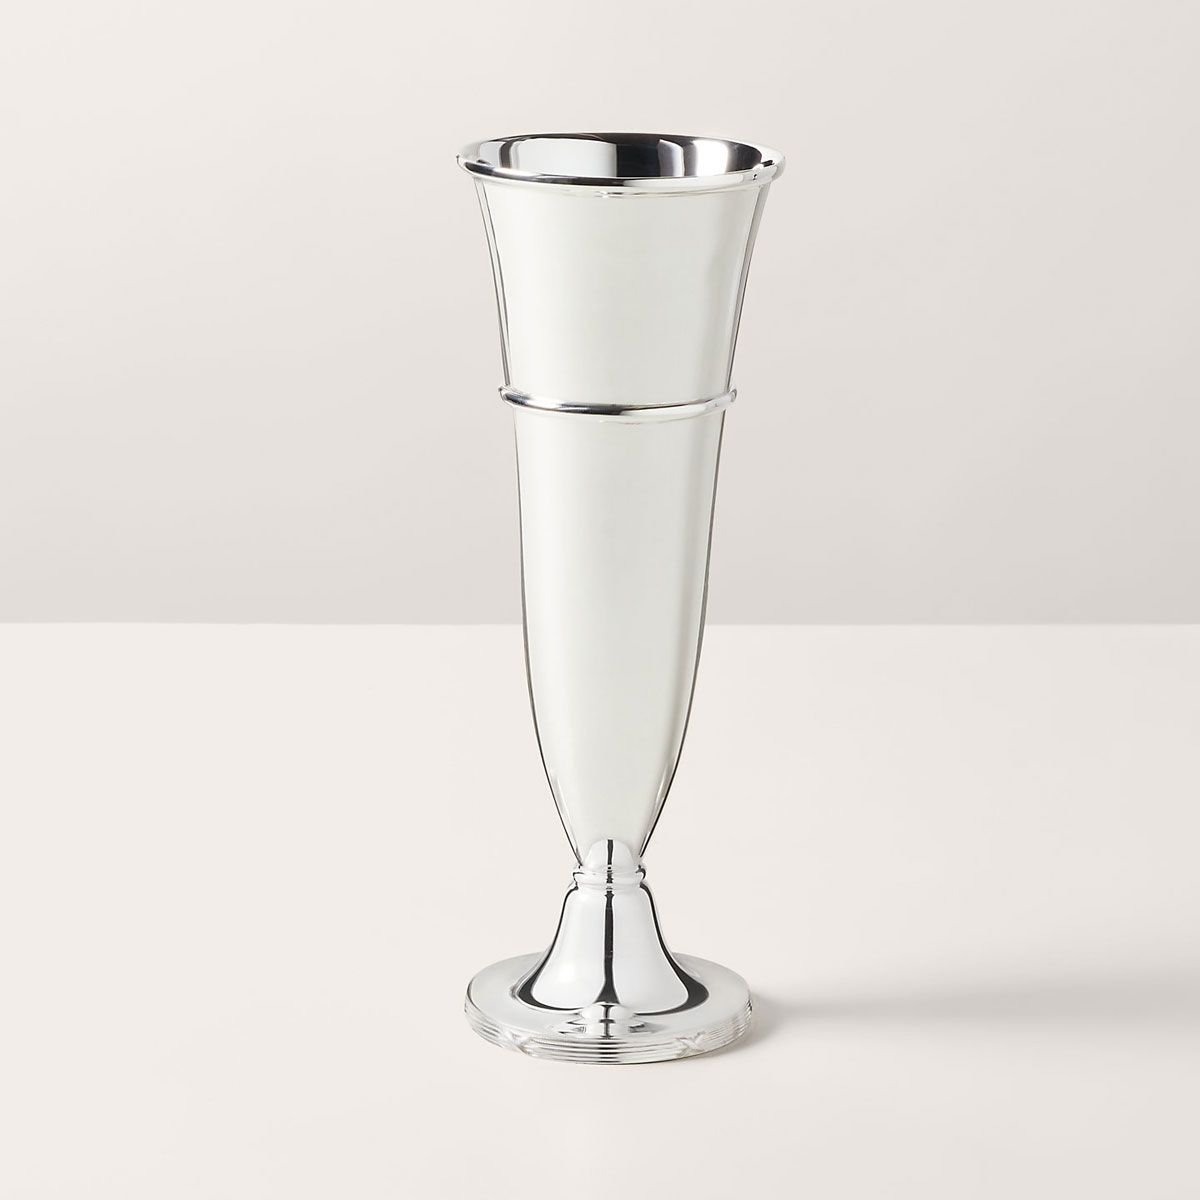 Ralph Lauren Brittingham 10" Vase, Silver